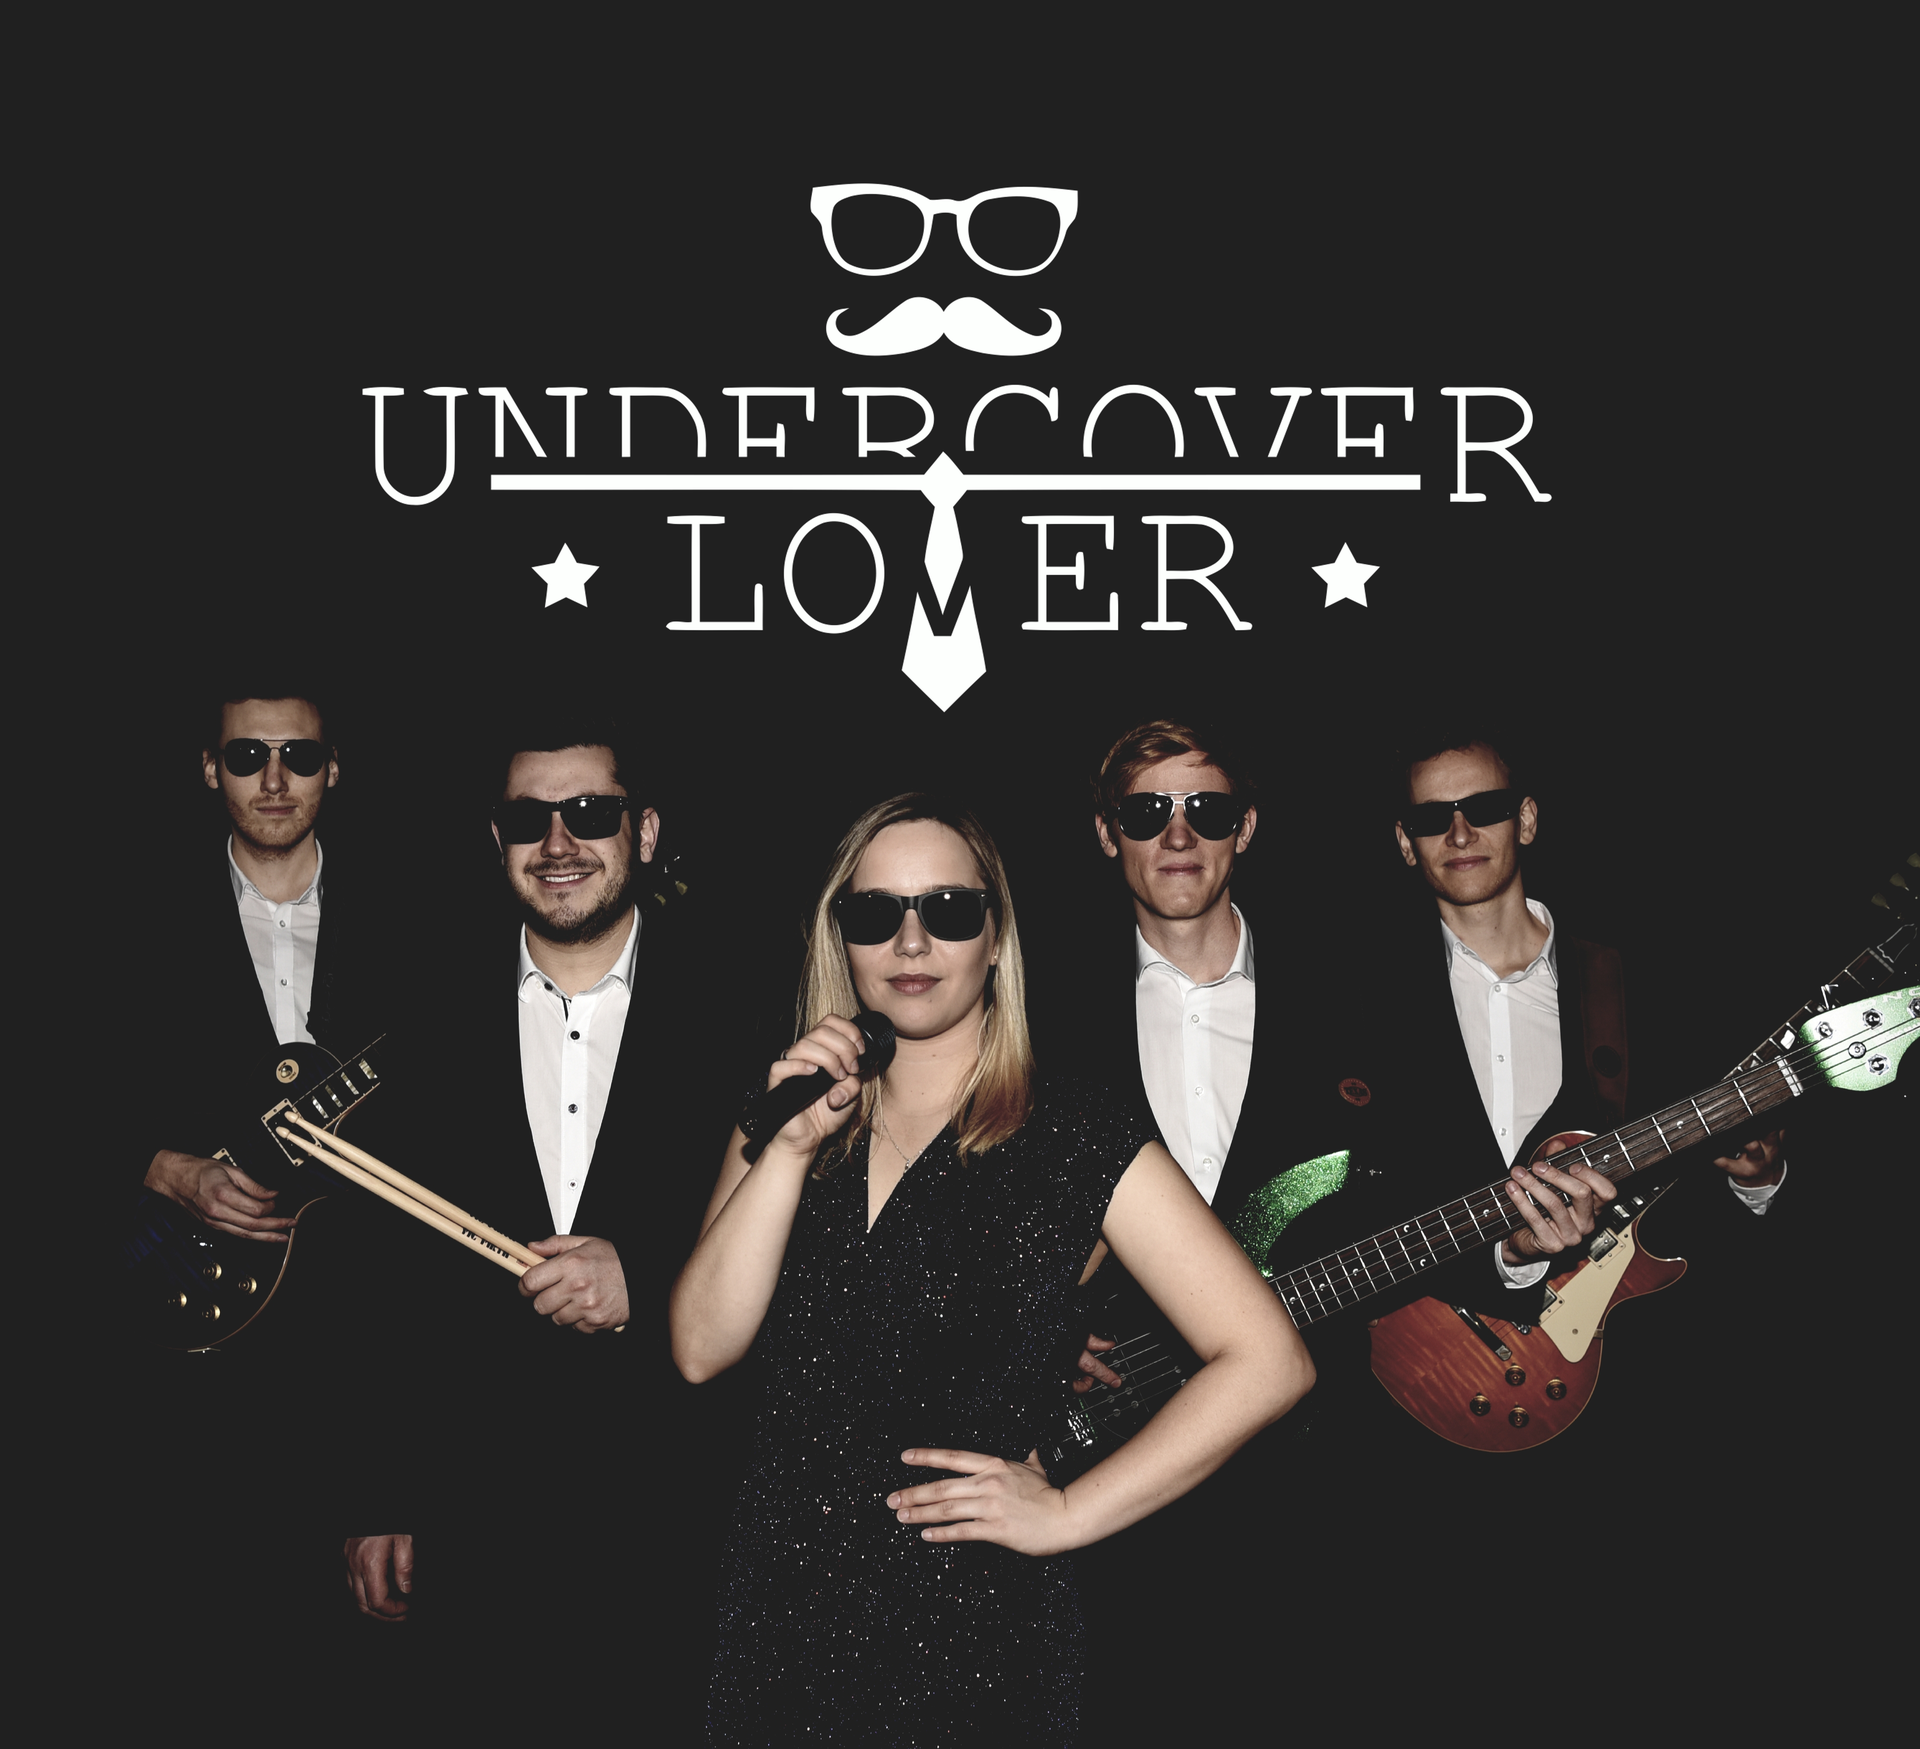 (c) Partyband-undercover-lover.de